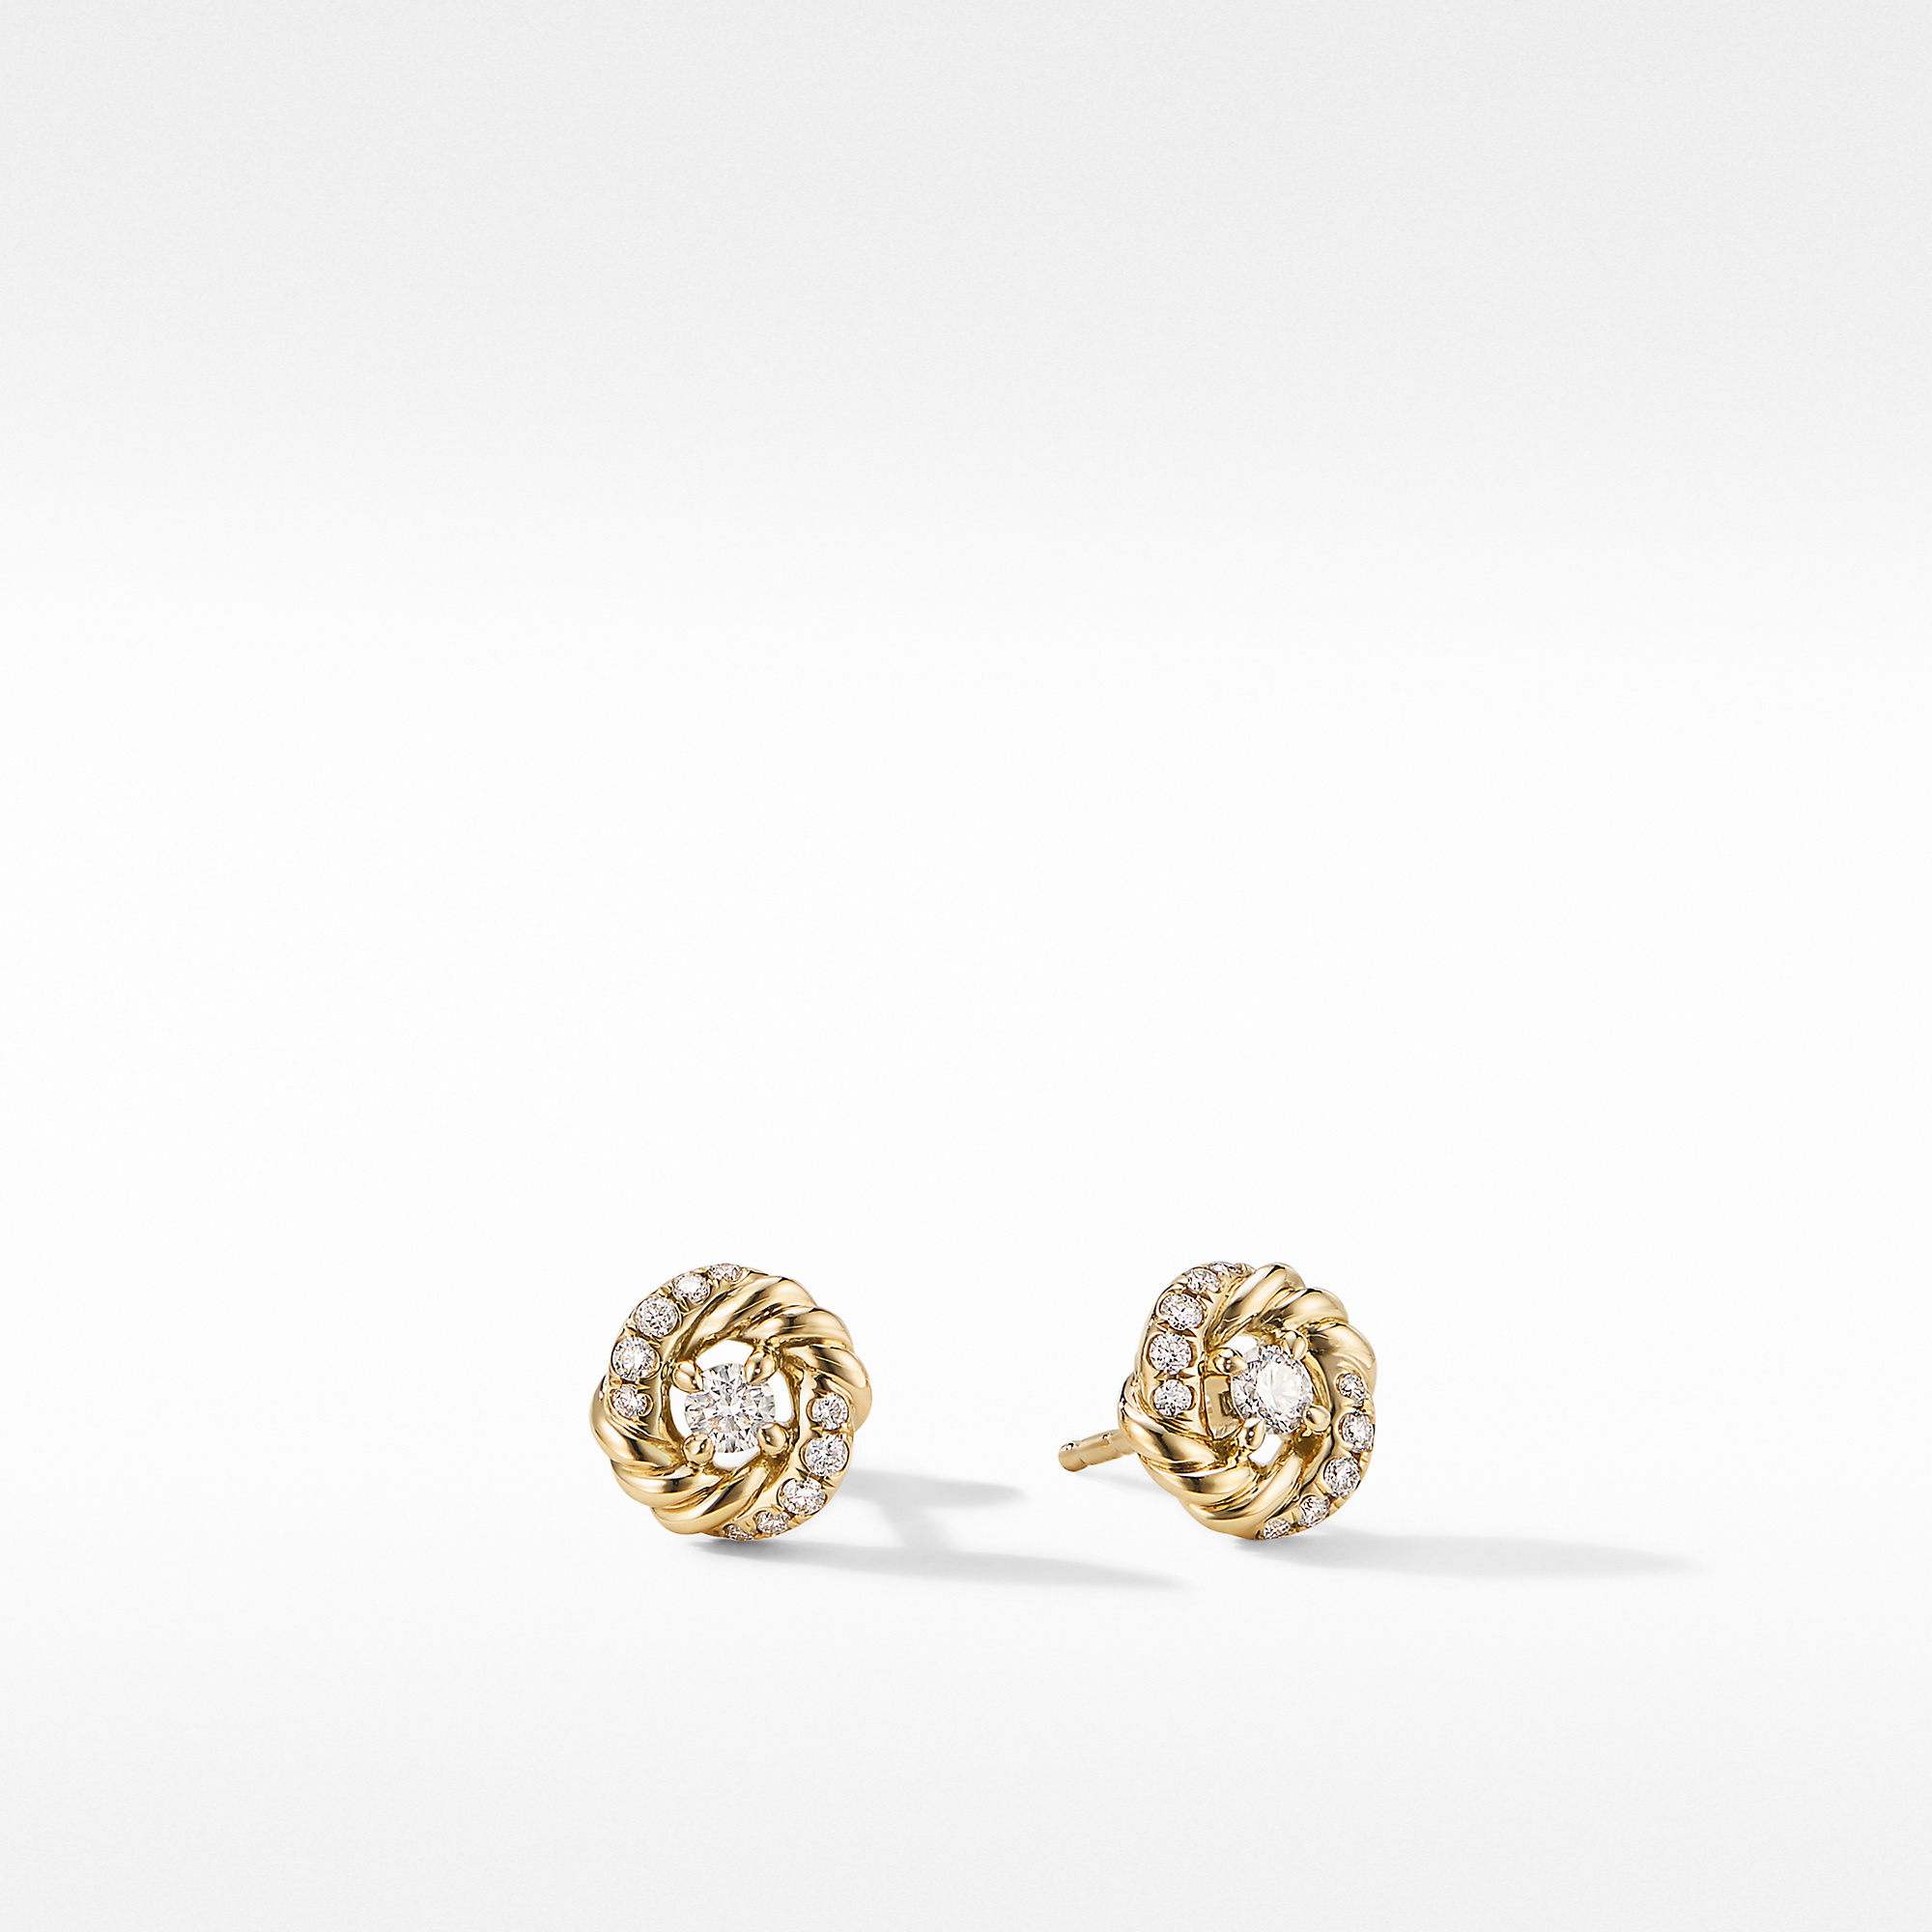 Petite Infinity Stud Earrings in 18K Yellow Gold with Diamonds, 7.8mm